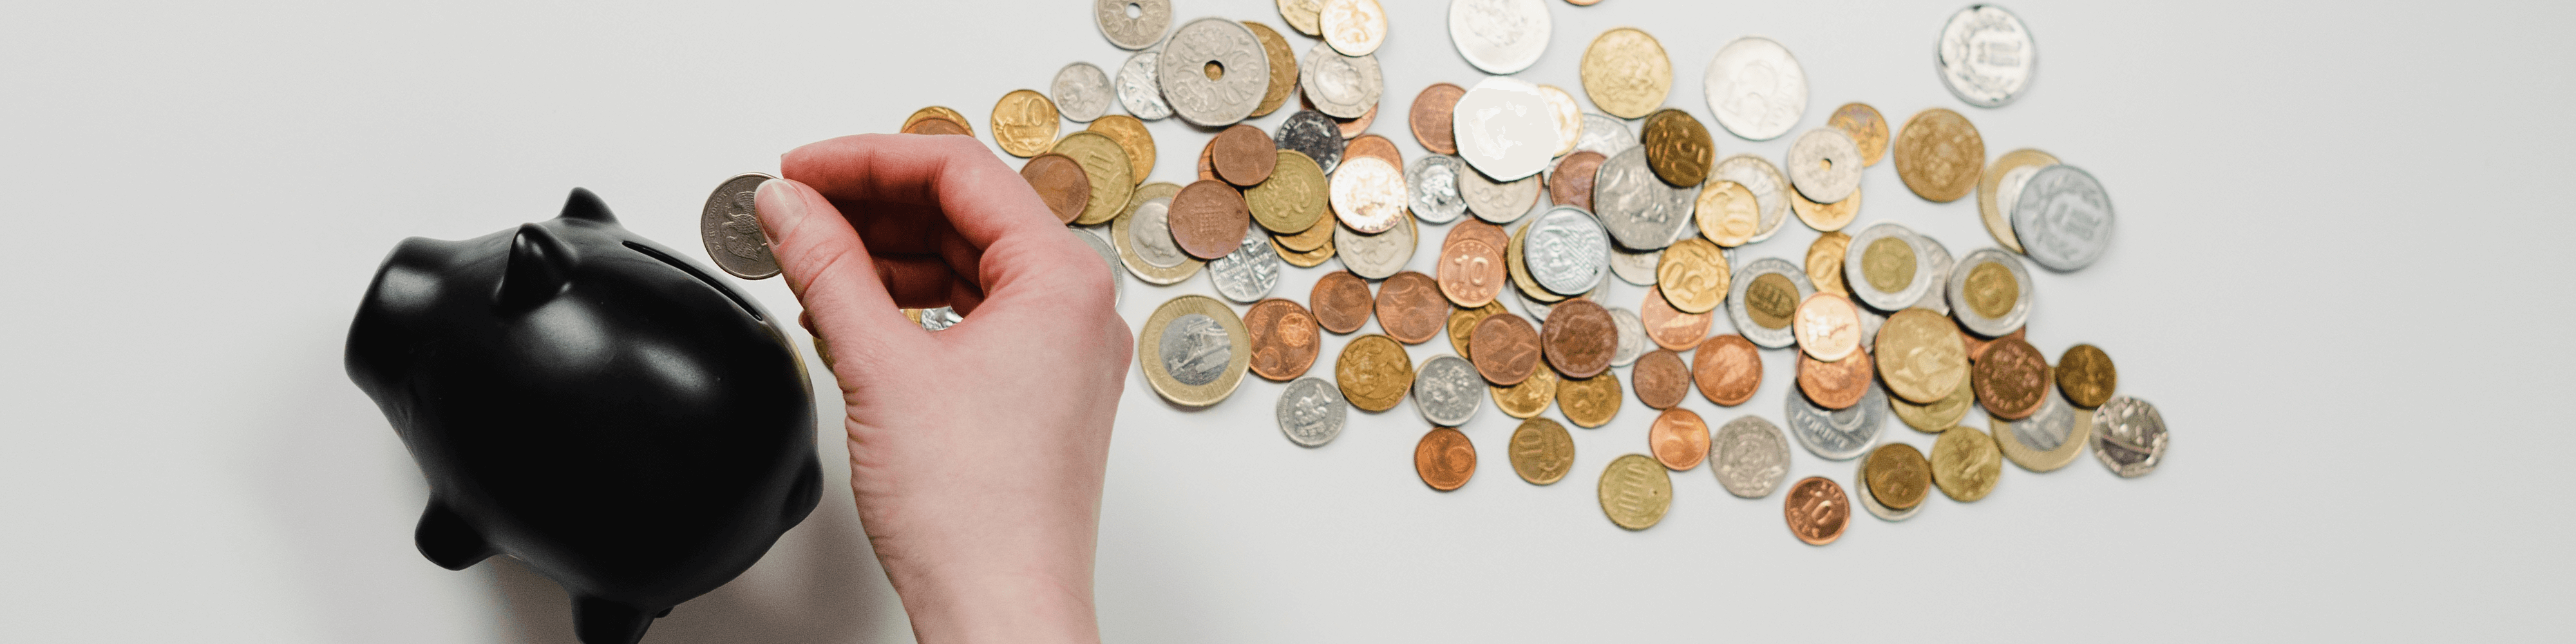 Top 5 Best Money Earning Apps